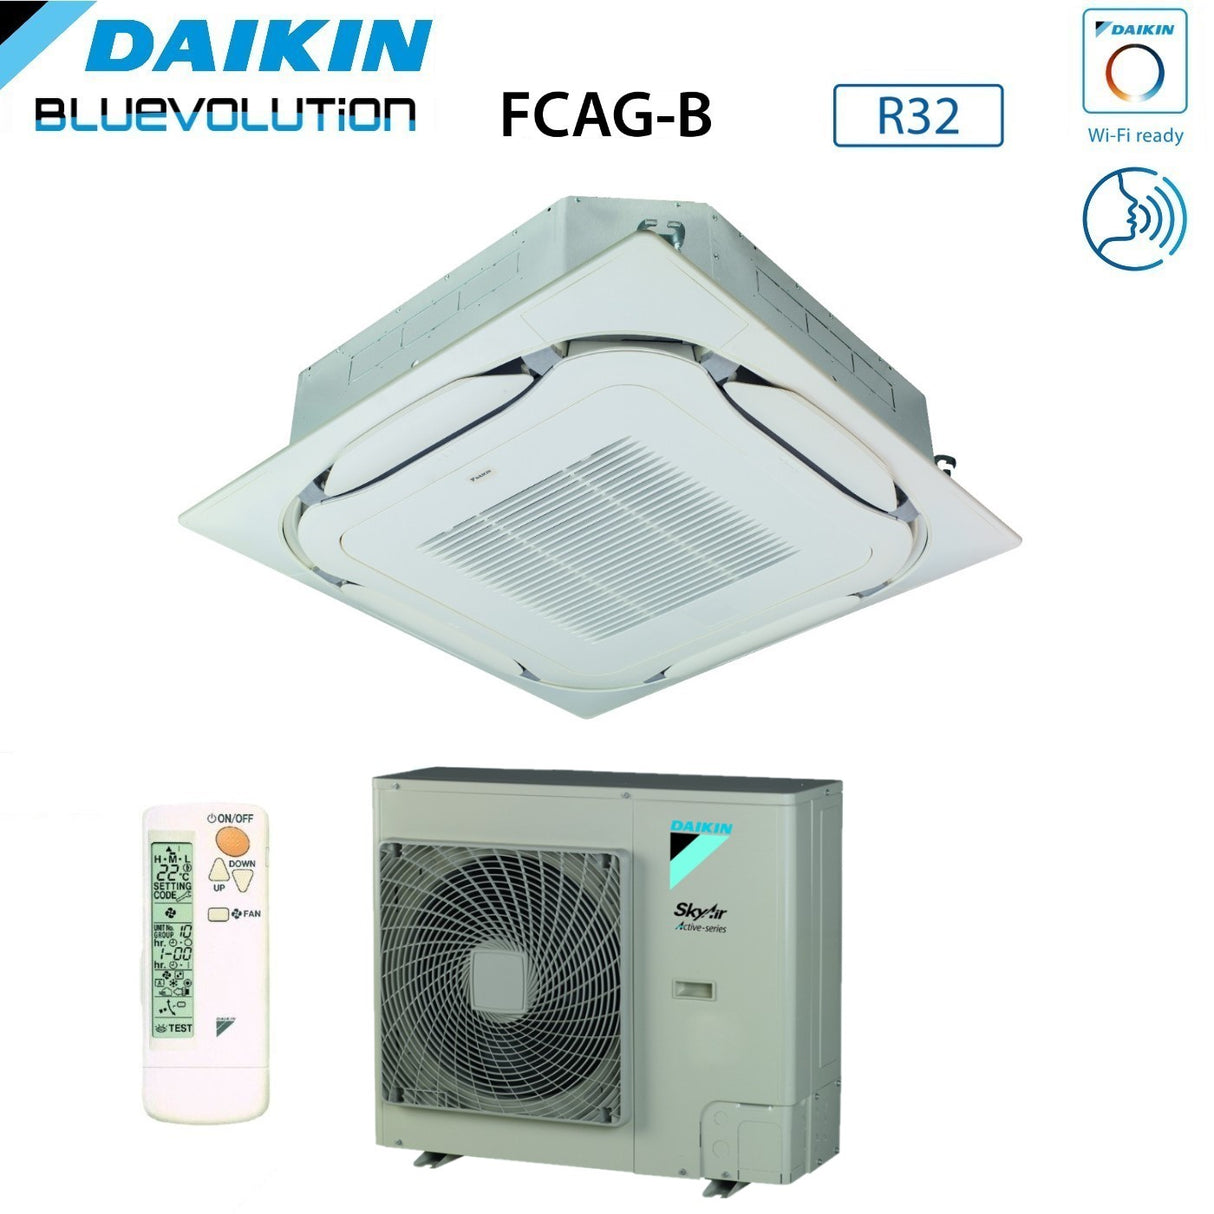 immagine-4-daikin-climatizzatore-condizionatore-daikin-bluevolution-a-cassetta-round-flow-24000-btu-fcag71b-azas71mv1-r-32-wi-fi-optional-con-griglia-standard-inclusa